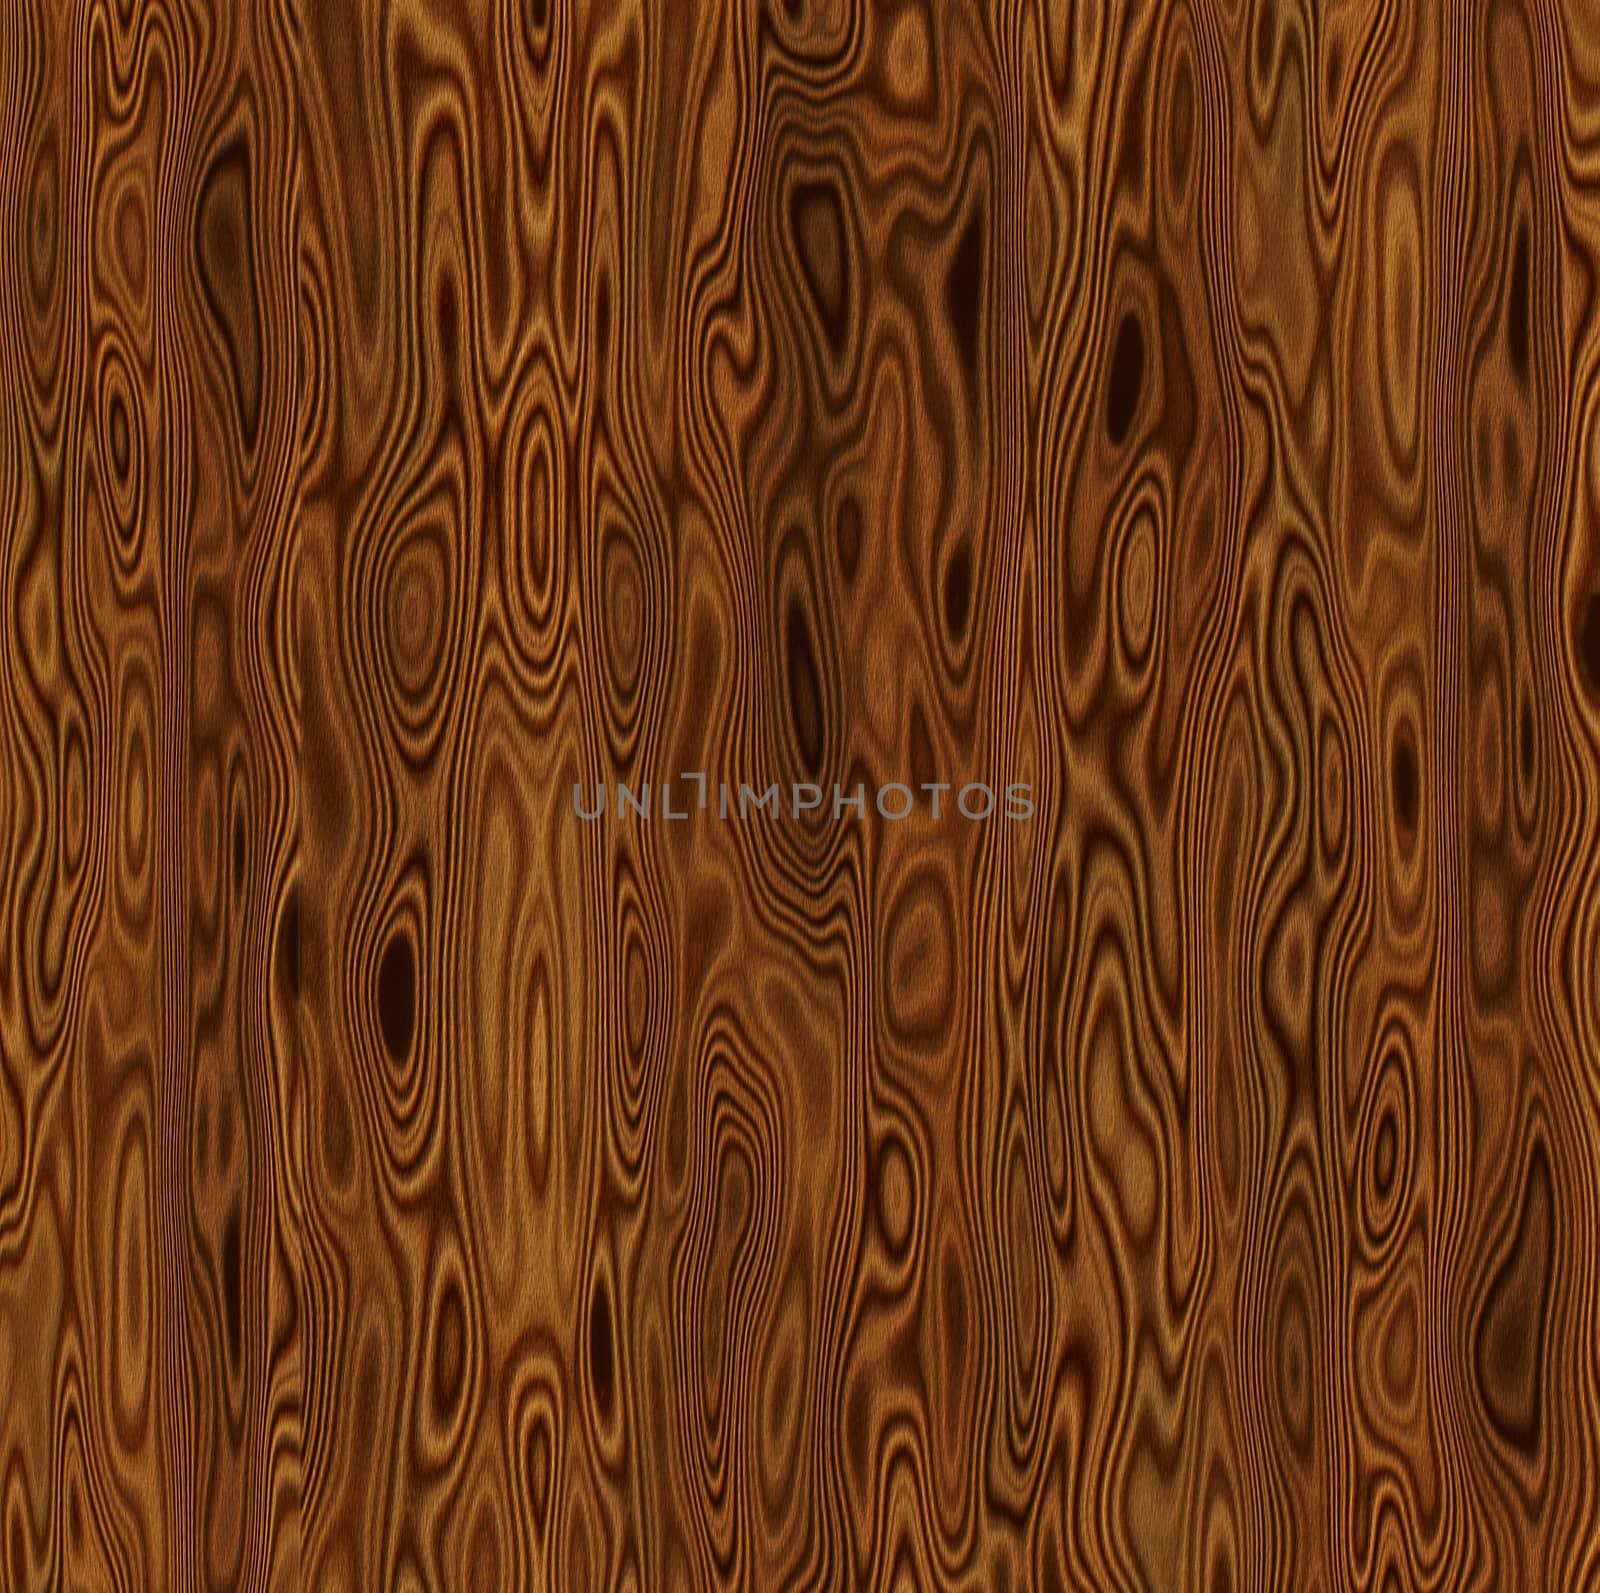 Digital illustration of a wood grain texture.